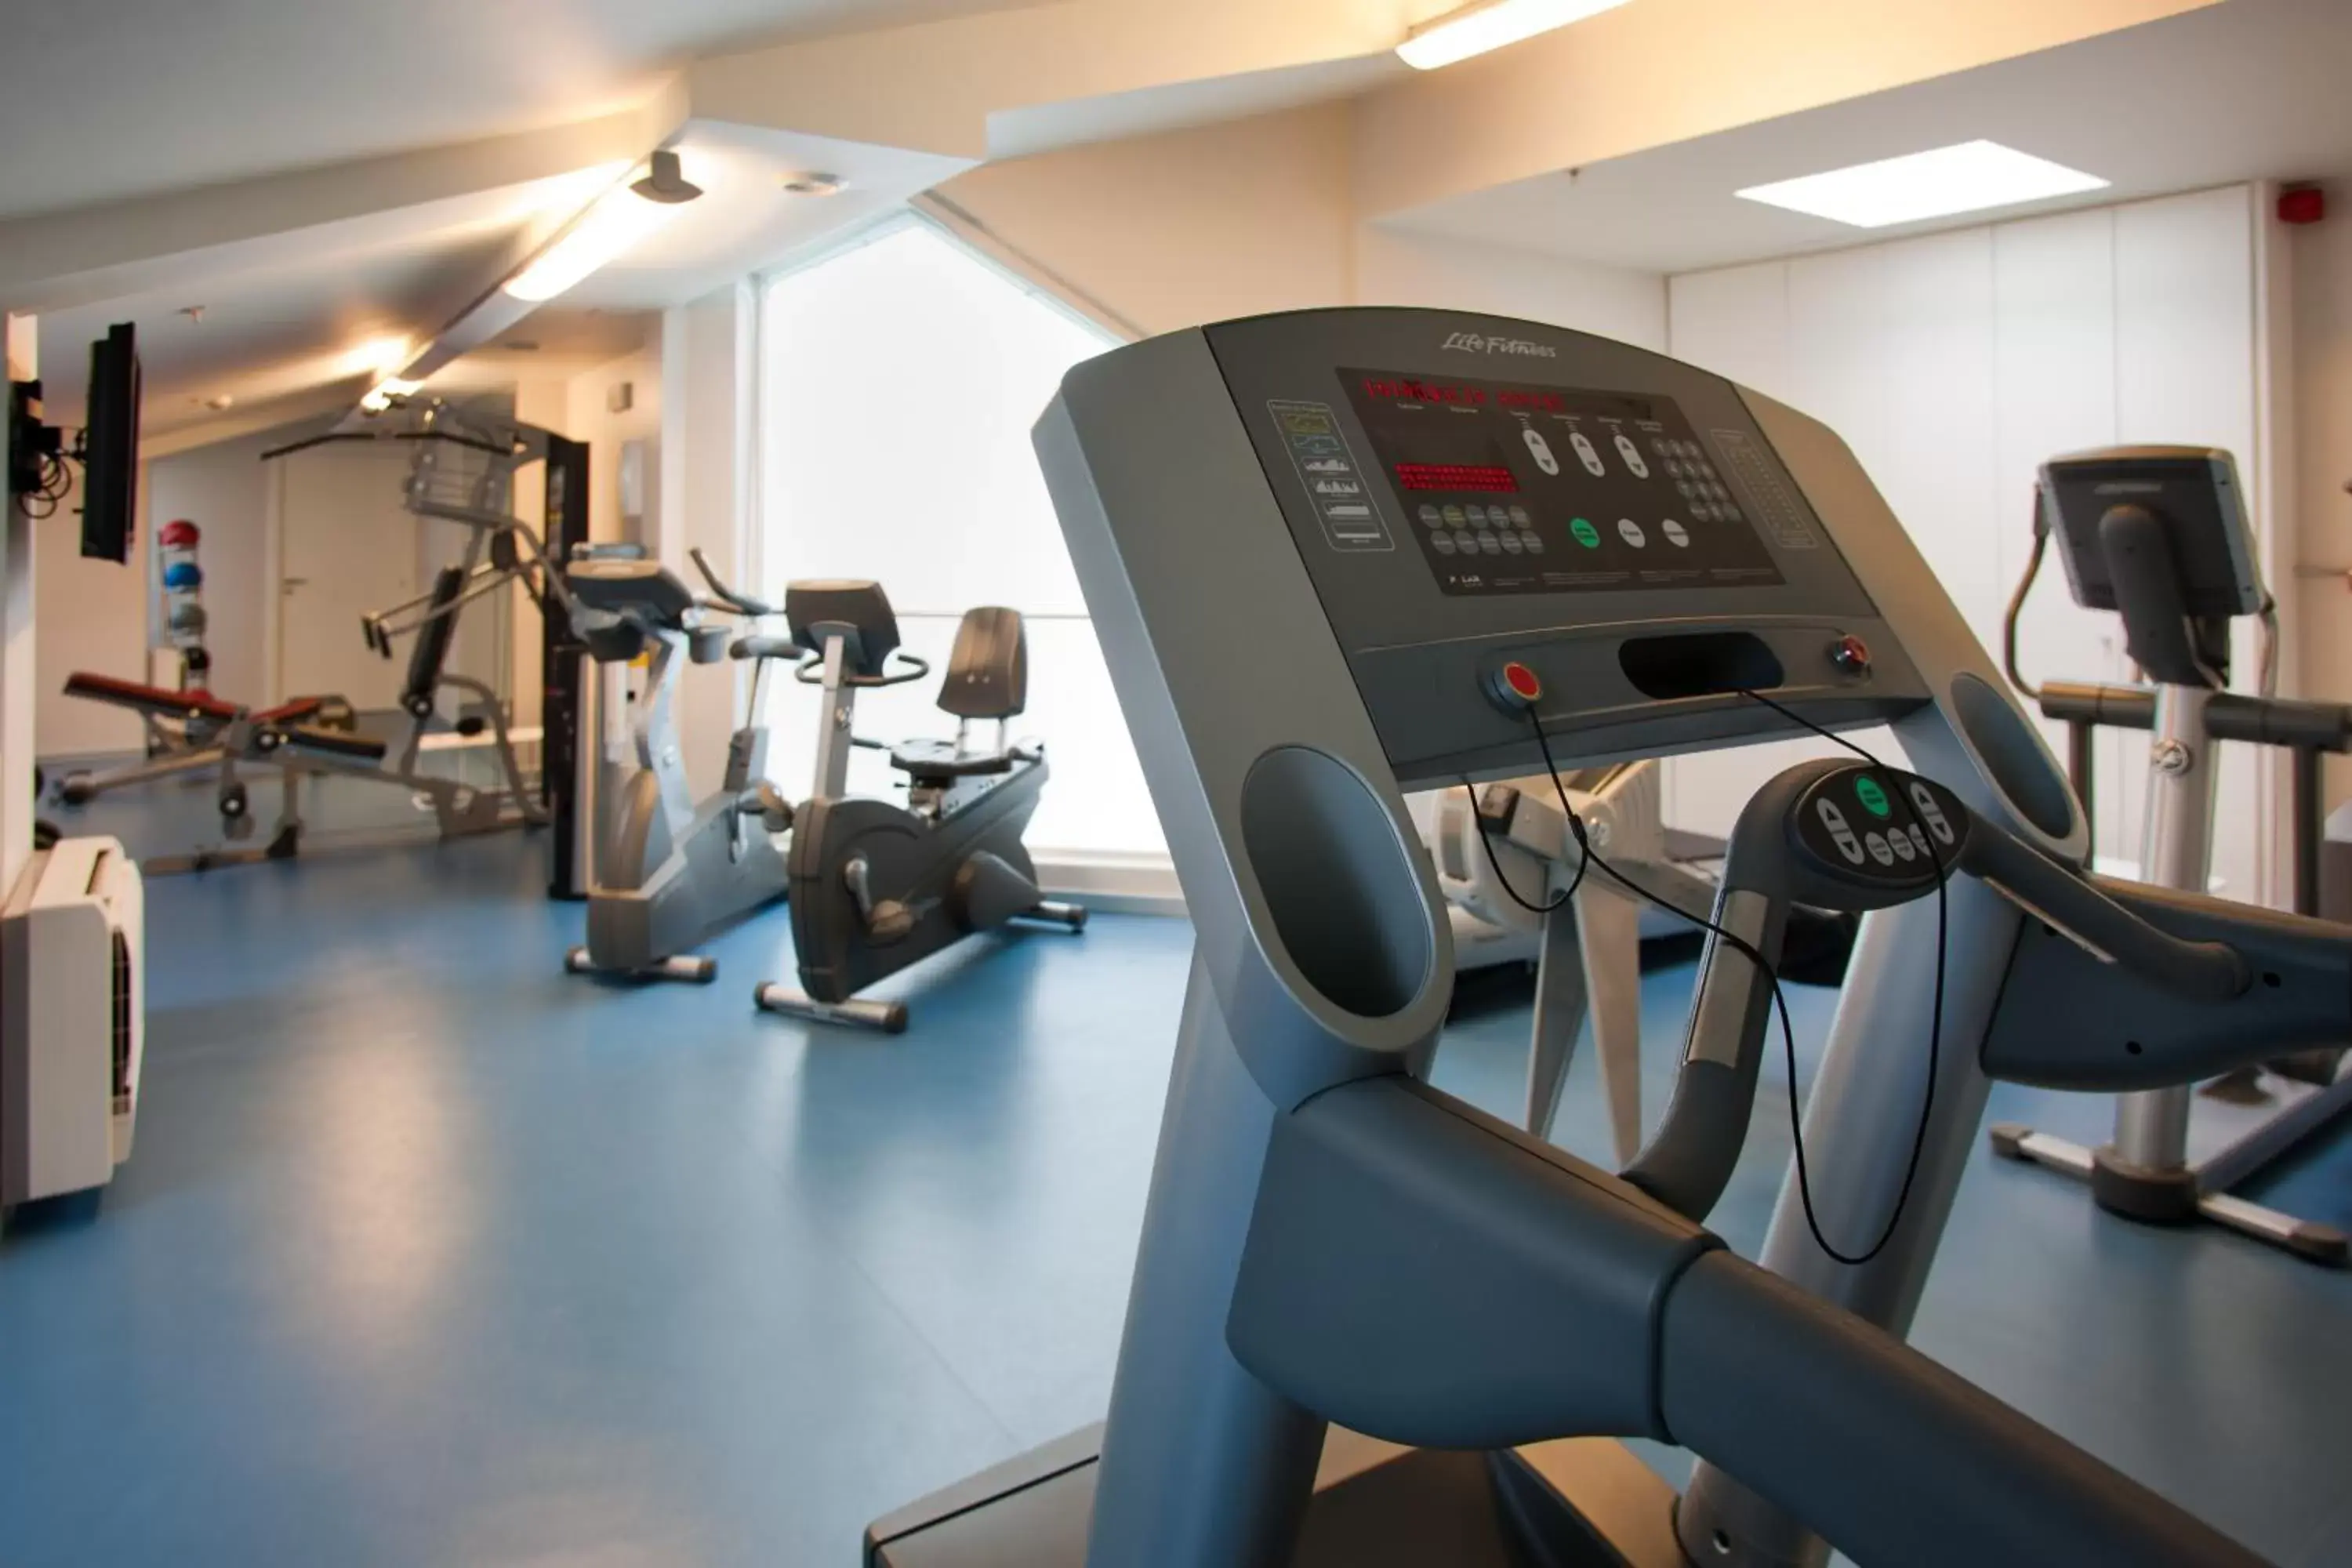 Fitness centre/facilities, Fitness Center/Facilities in Hotel Zinema7